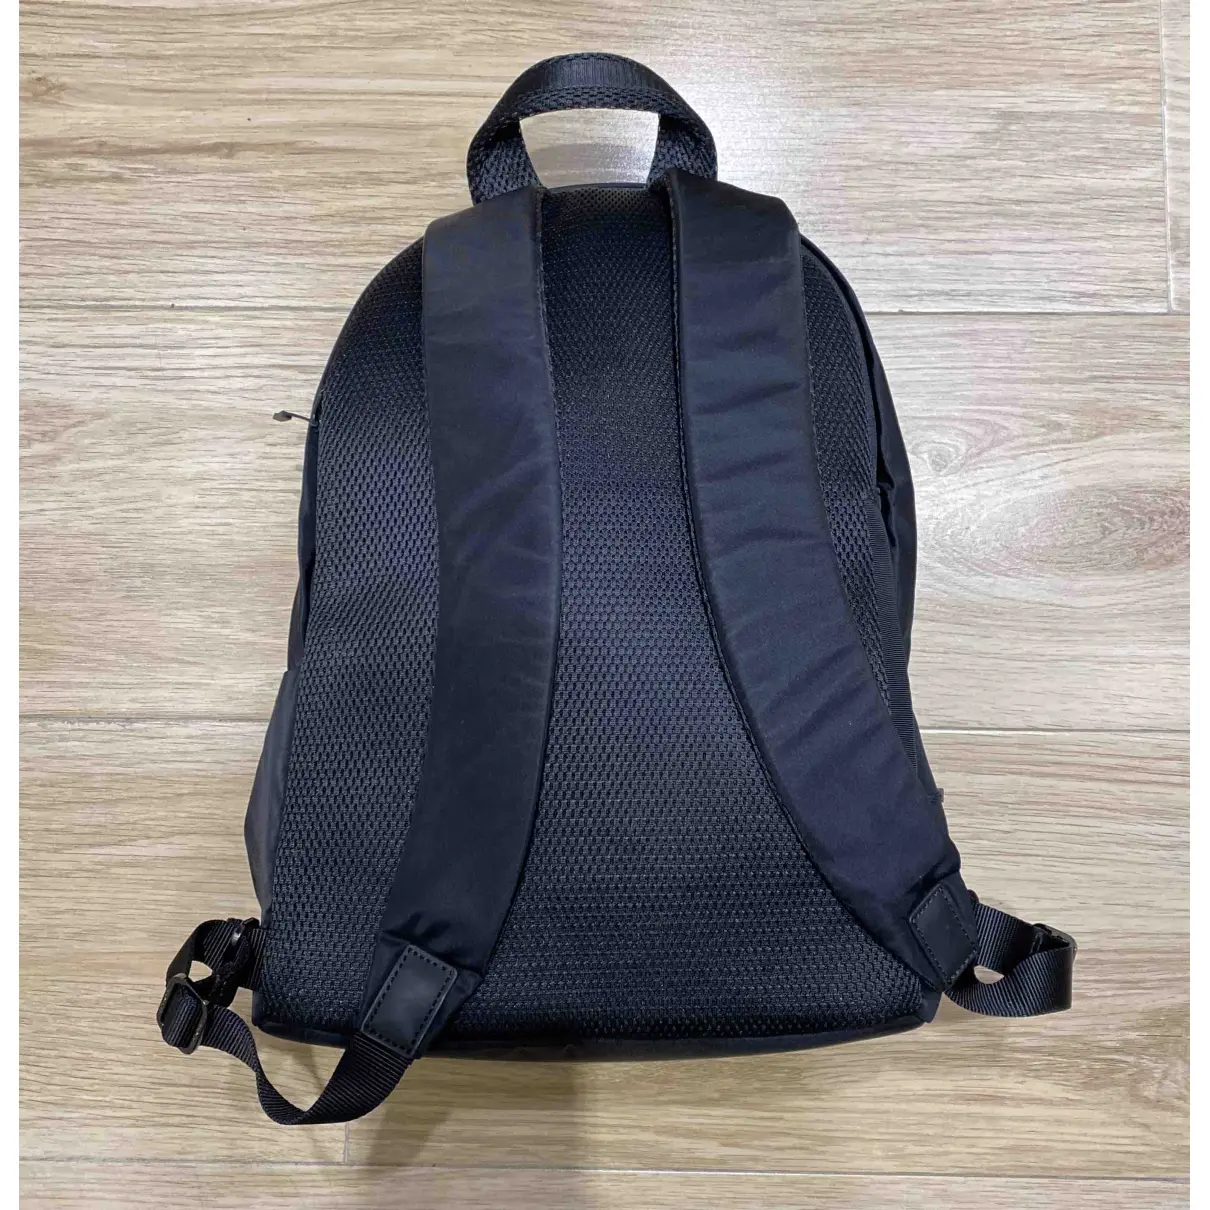 Cloth backpack Lululemon